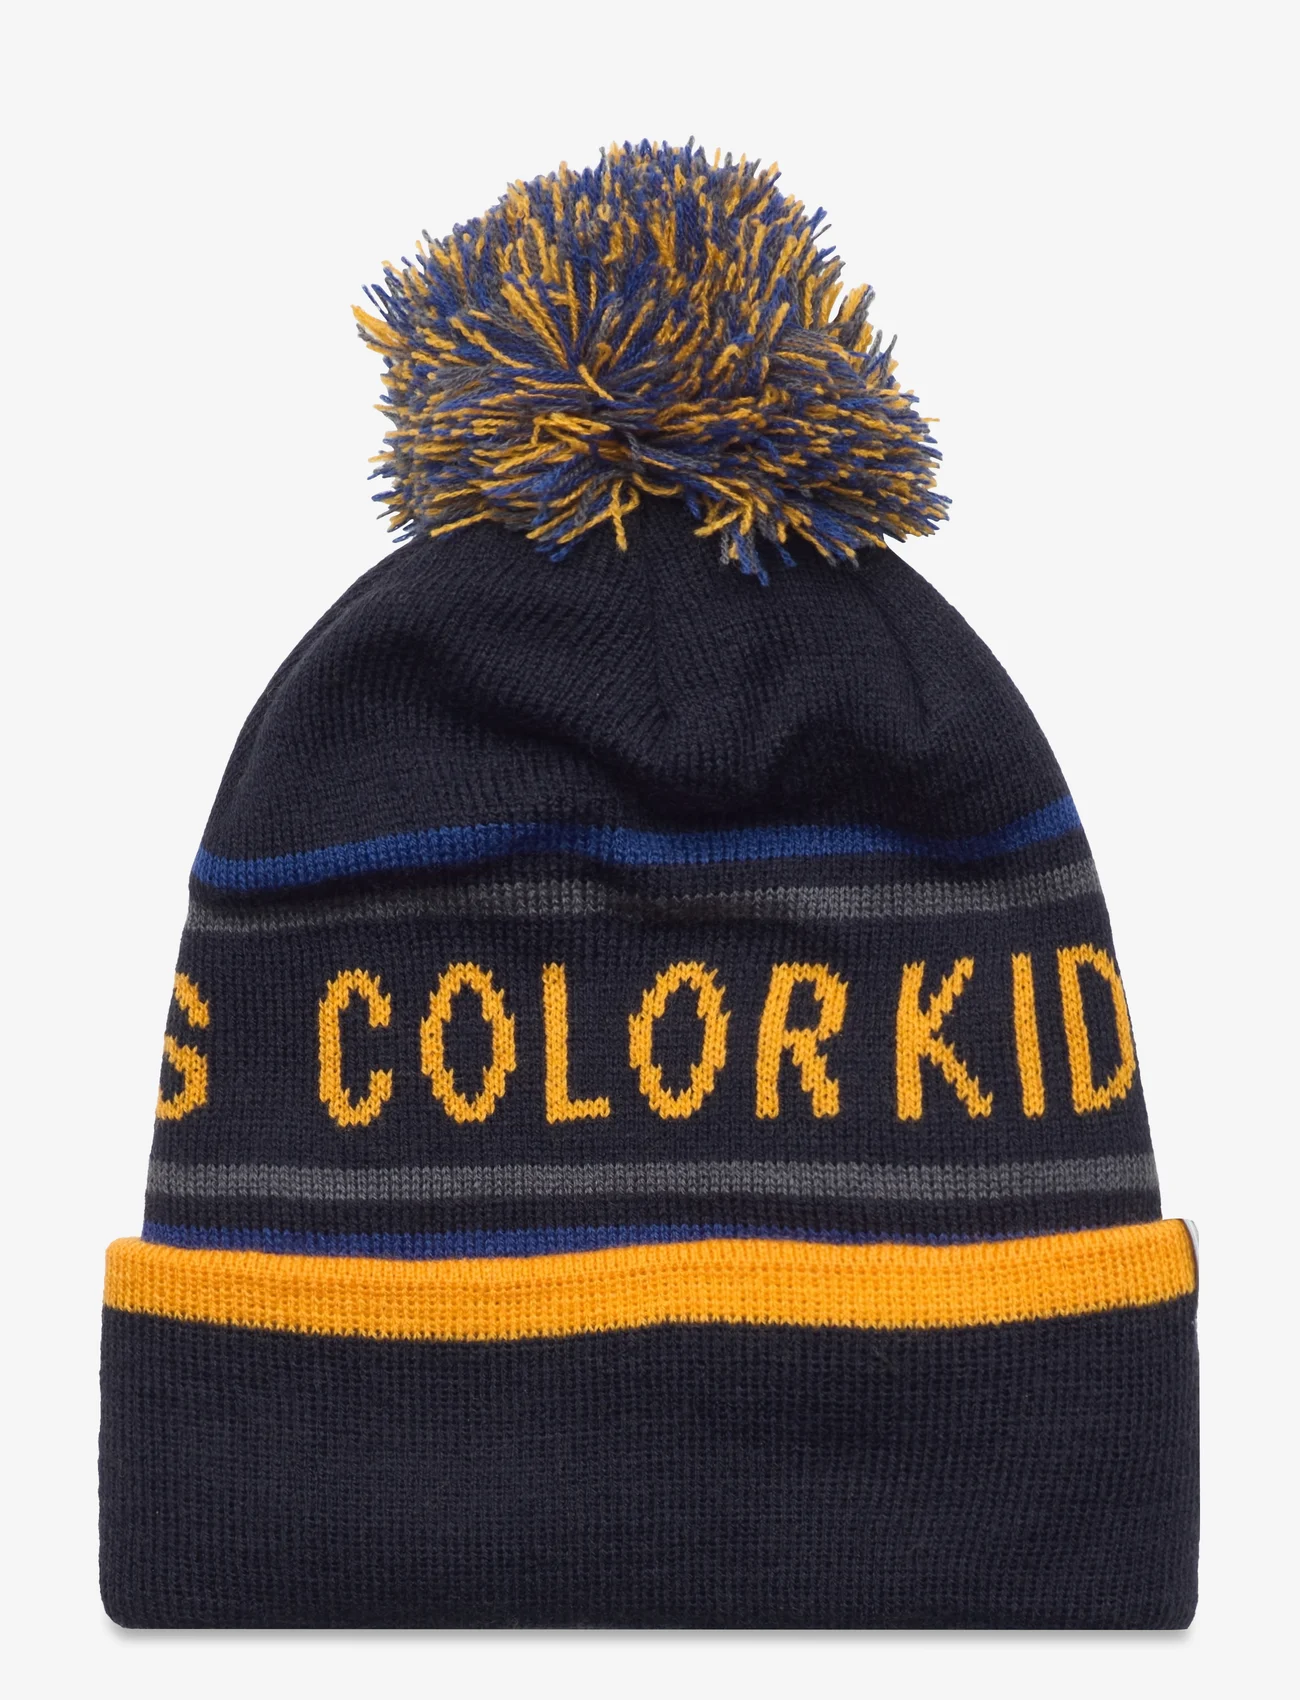 Color Kids - Hat - Logo CK - die niedrigsten preise - limoges - 0